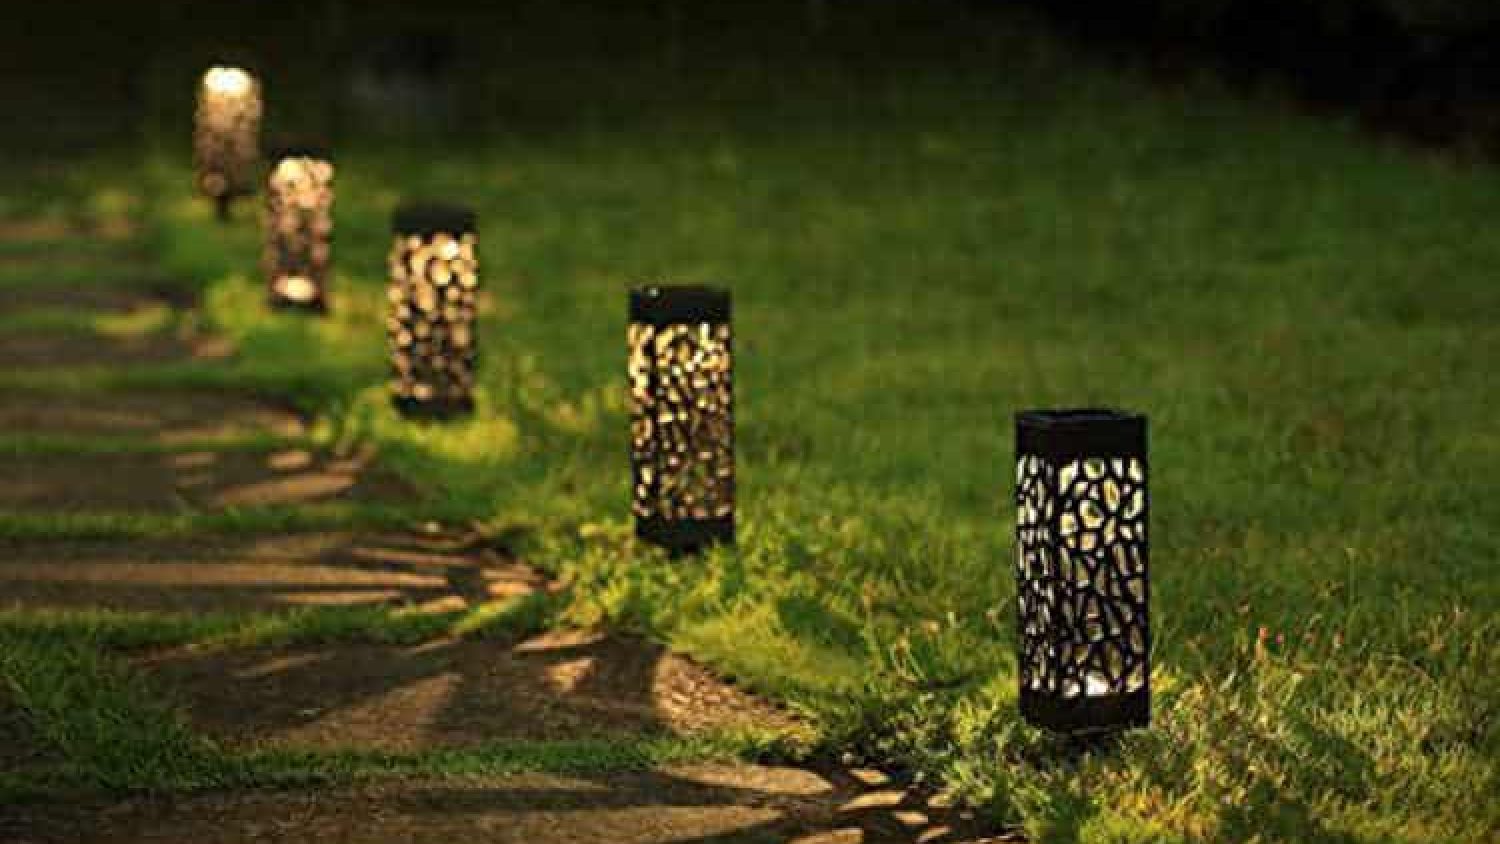 Best Garden Lighting: Top 5 Picks for Your Home